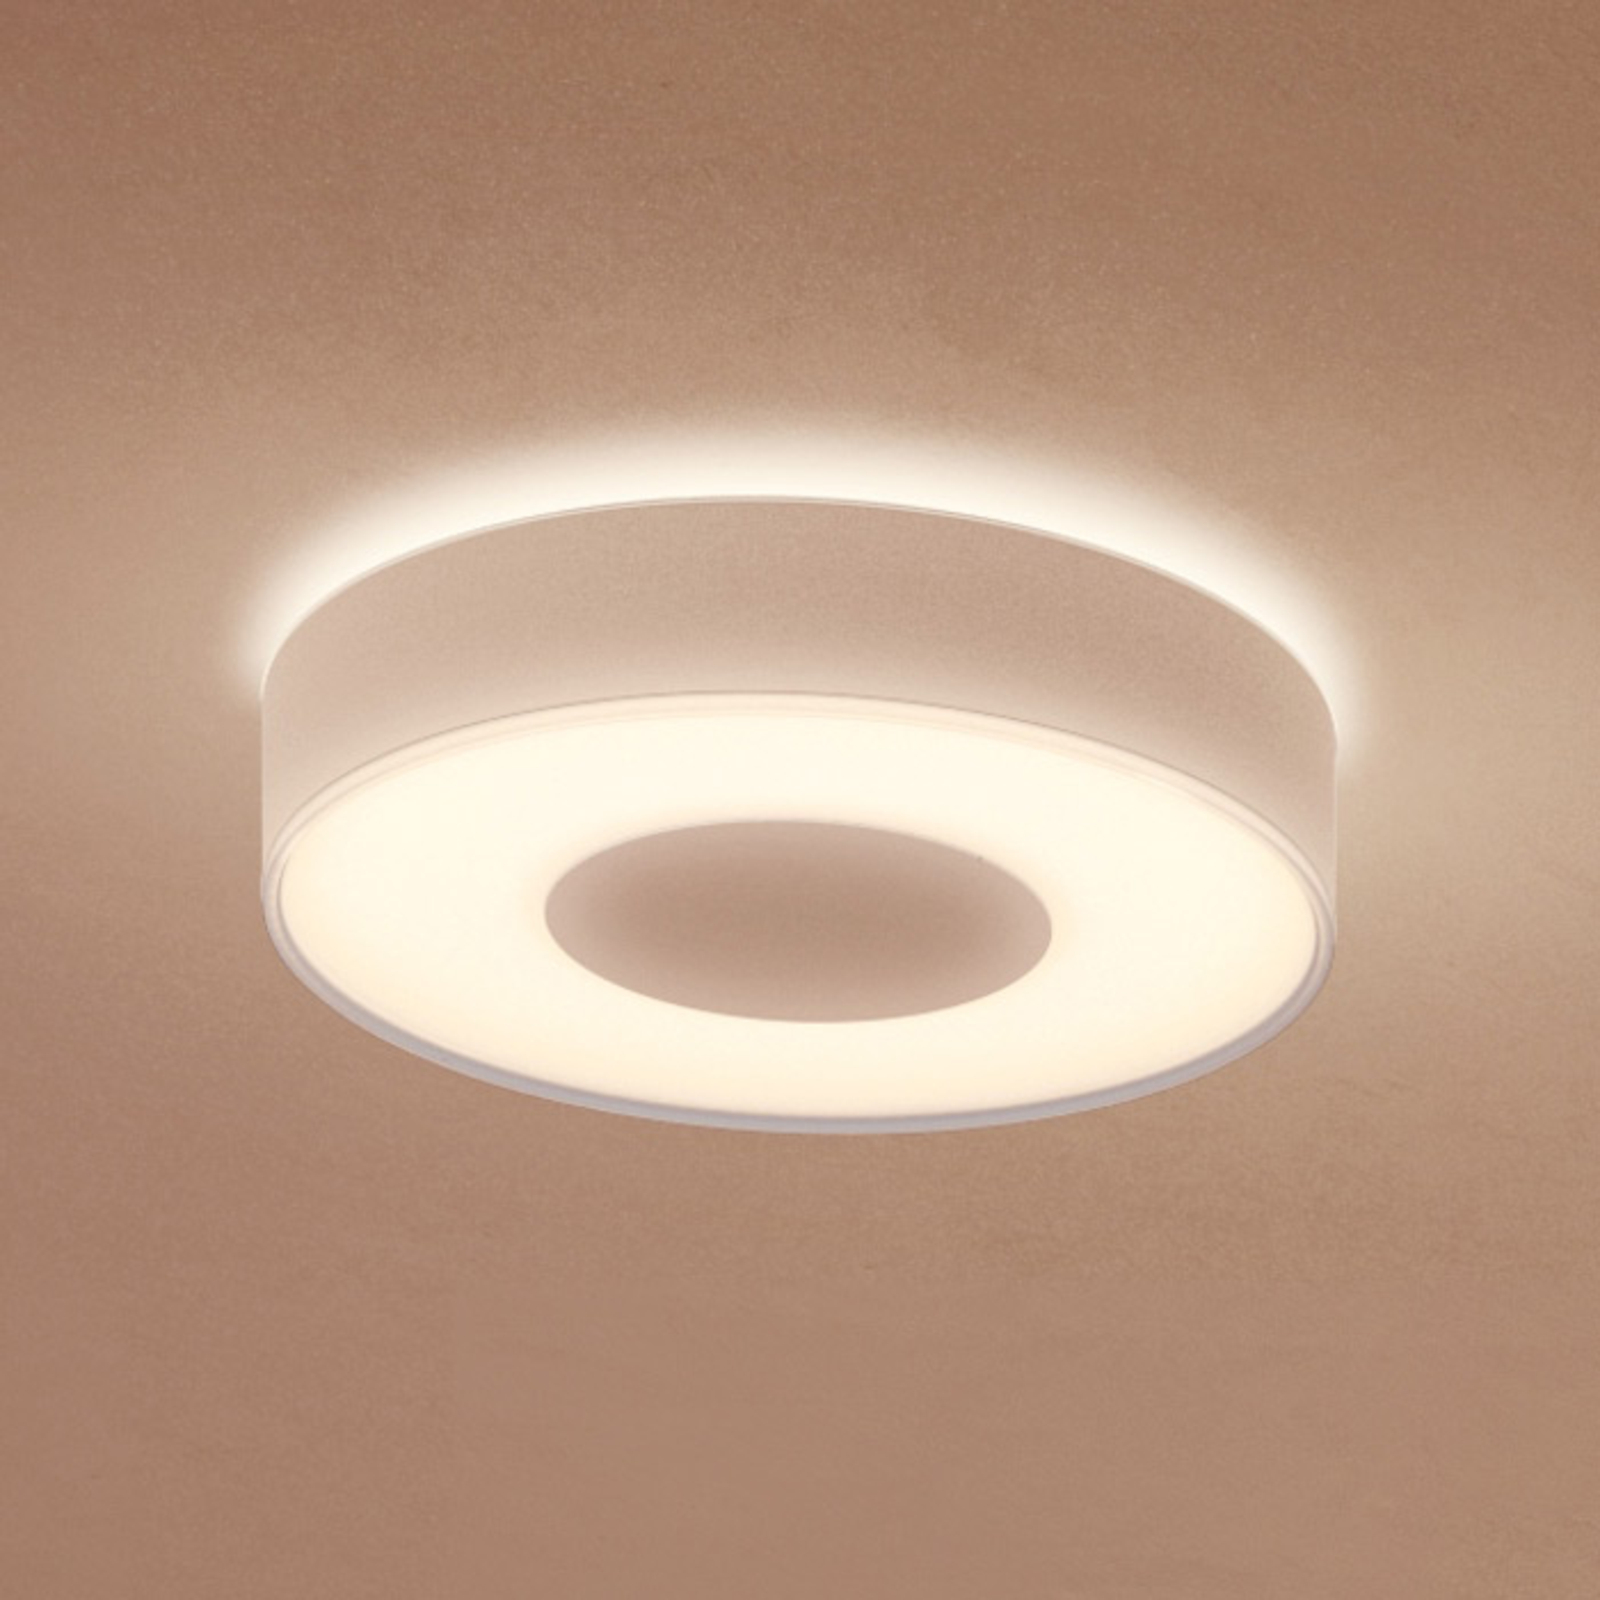 Convergeren Emulatie Chemicaliën Philips Hue Xamento plafondlamp White and Color | Lampen24.be